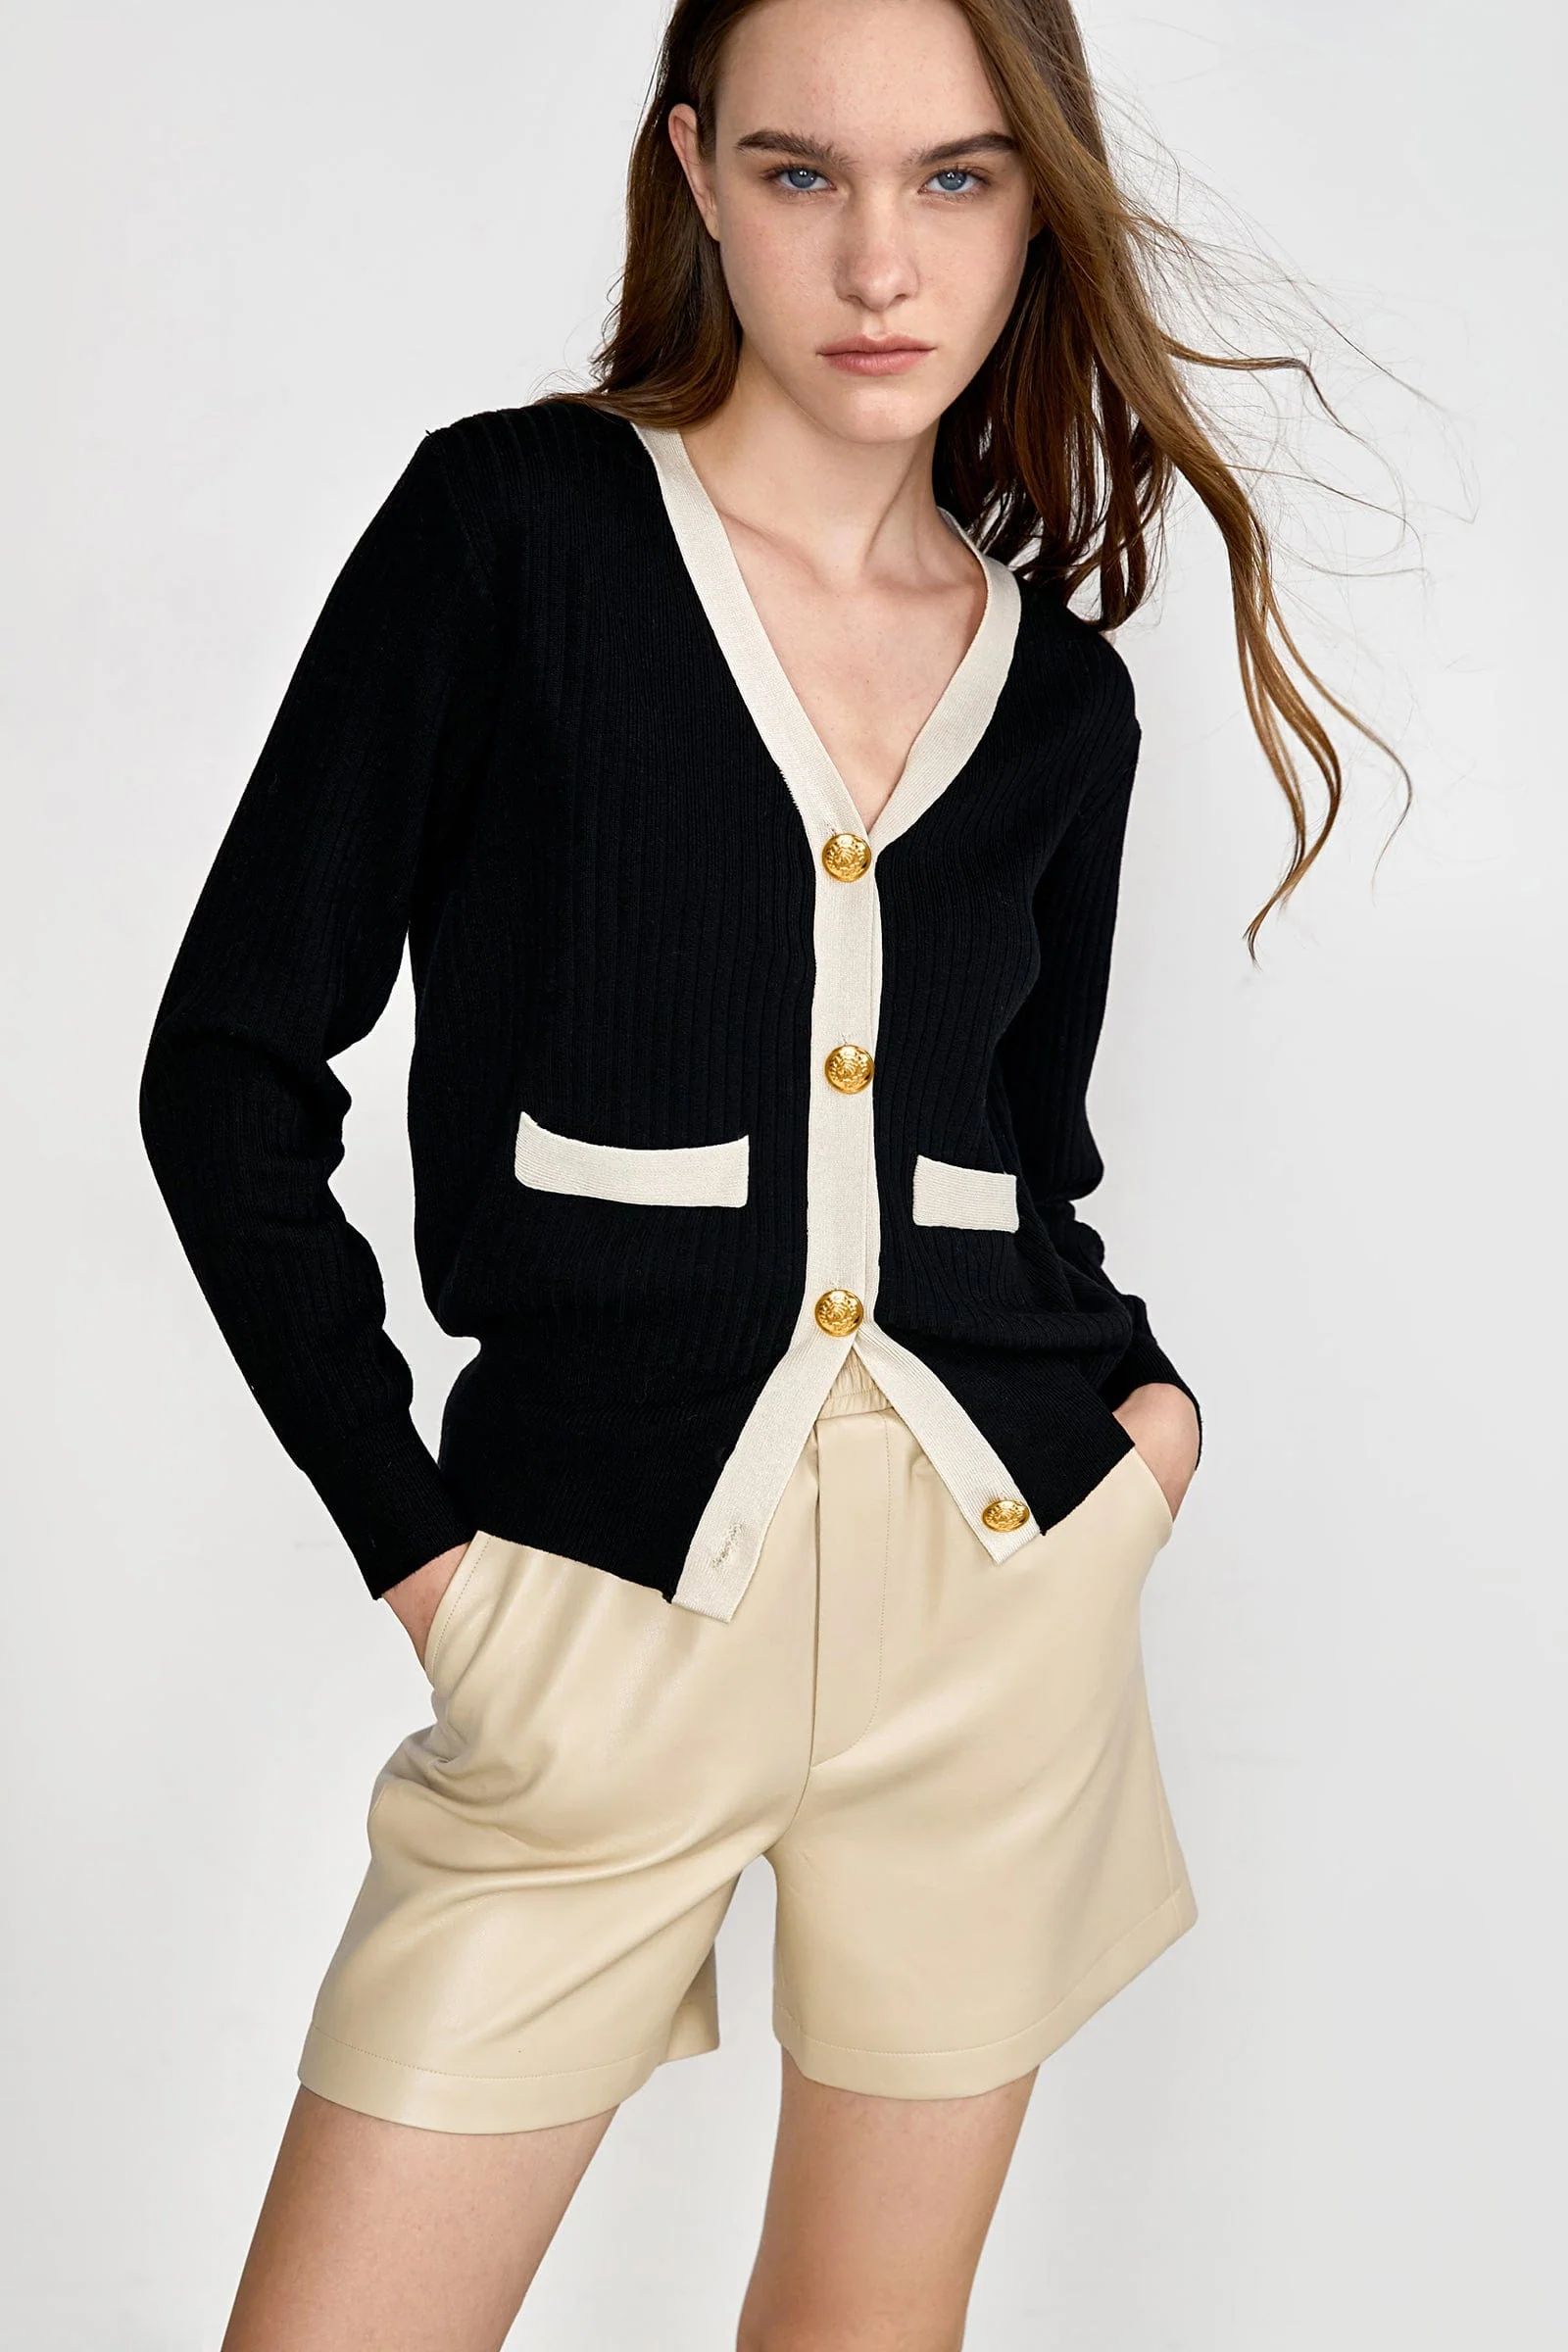 Lealia Black Contrast Knitted Cardigan | J.ING